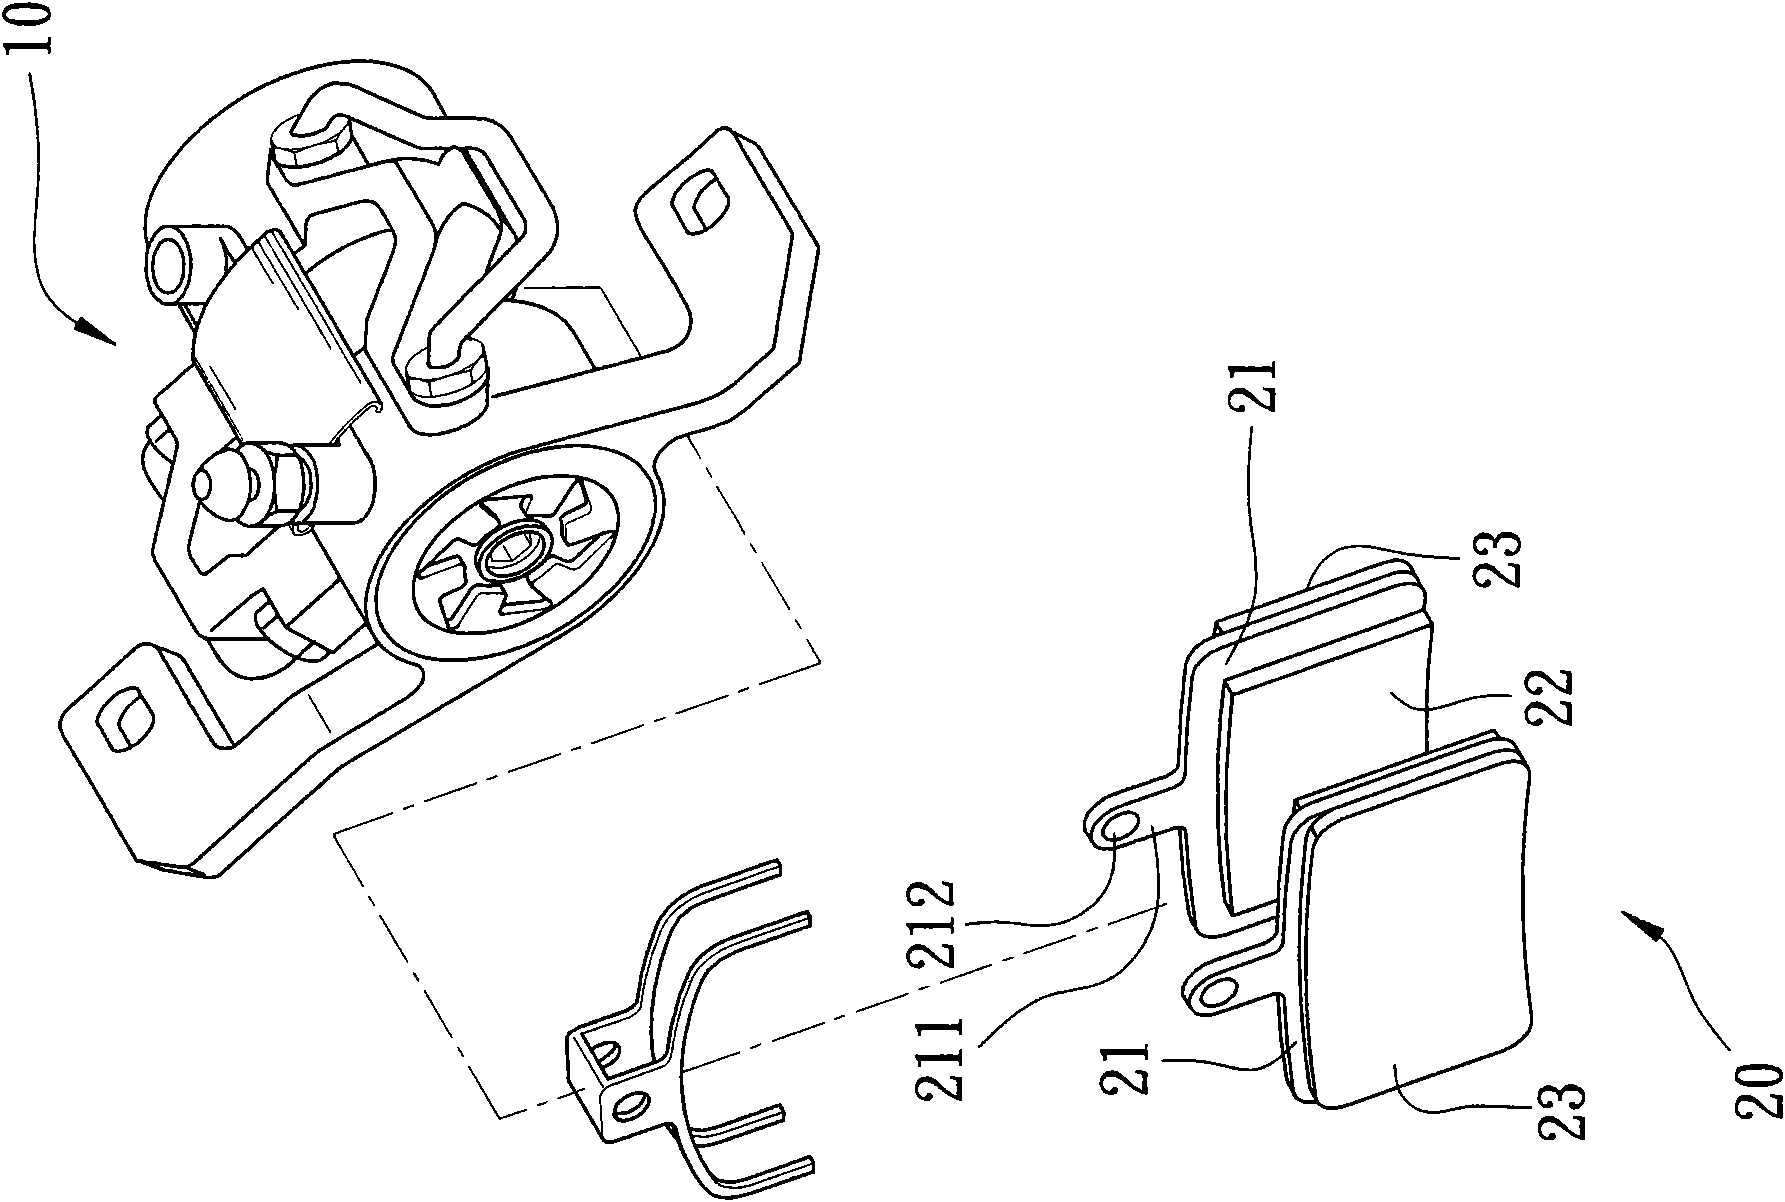 Brake spacer structure for disc brake